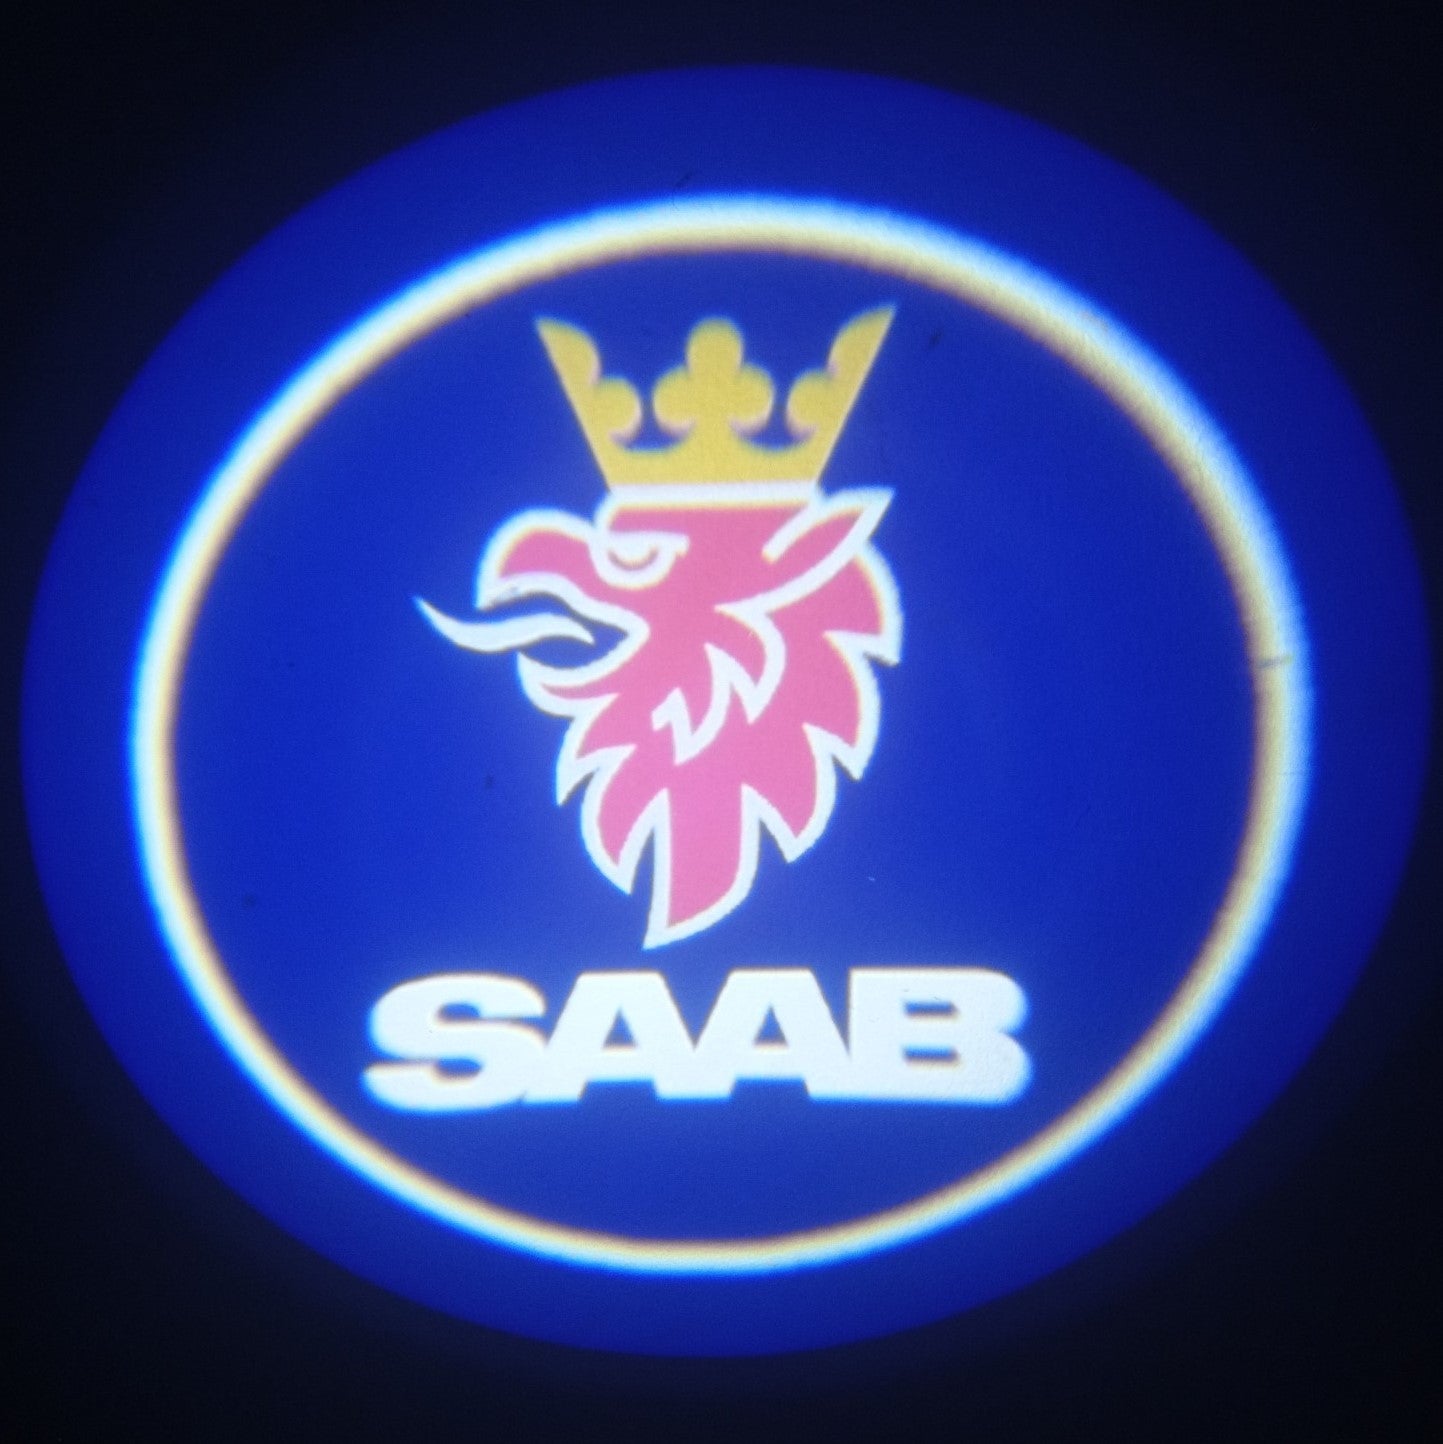 Luzes Cortesia com Logotipo marca Saab